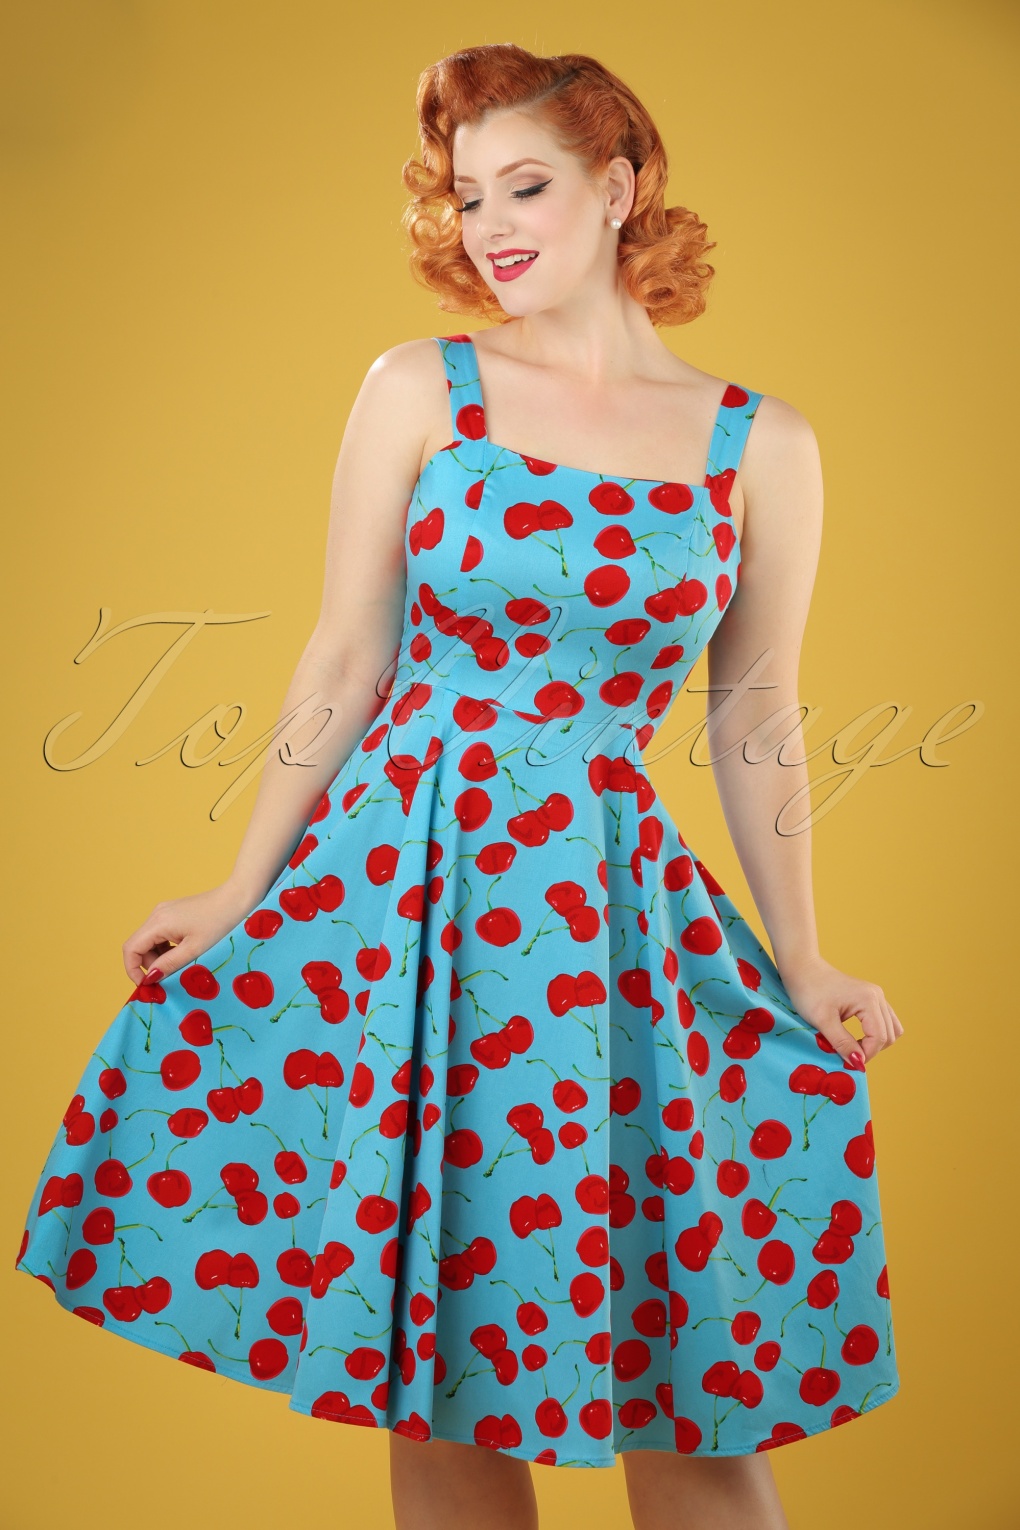 Retro 1950s Polka Dot Dresses for Sale